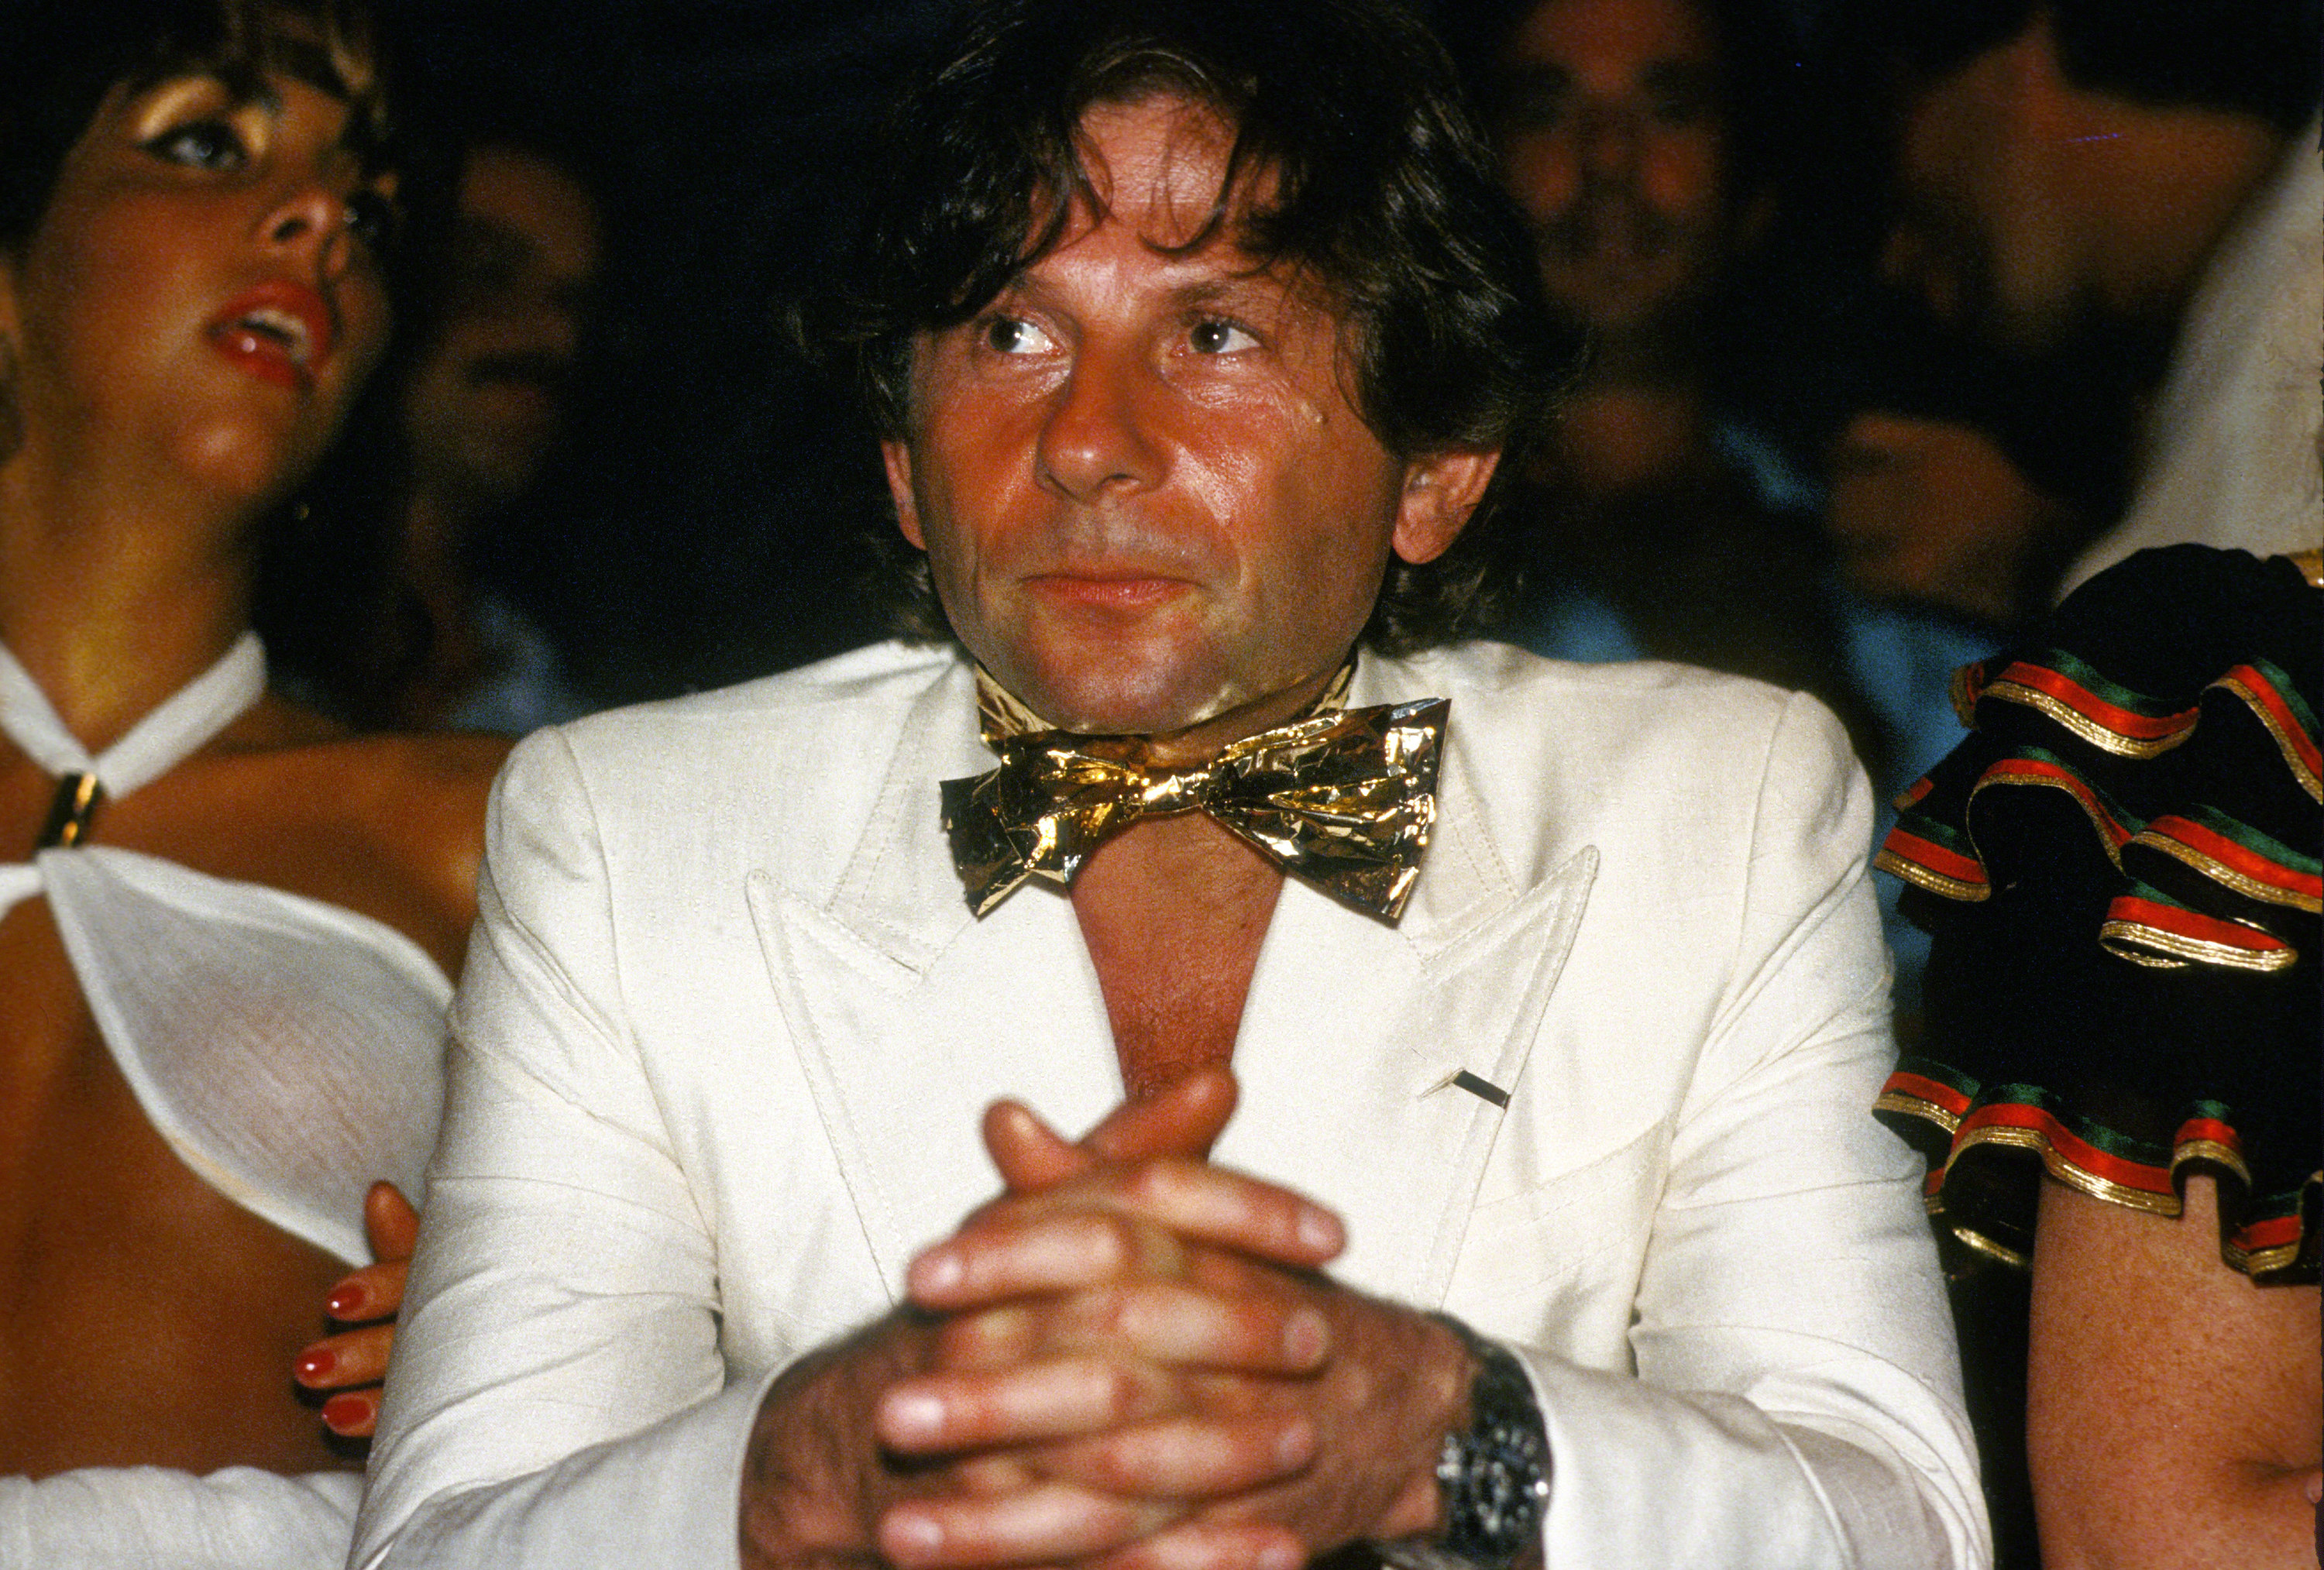 Roman Polanski attends an award function